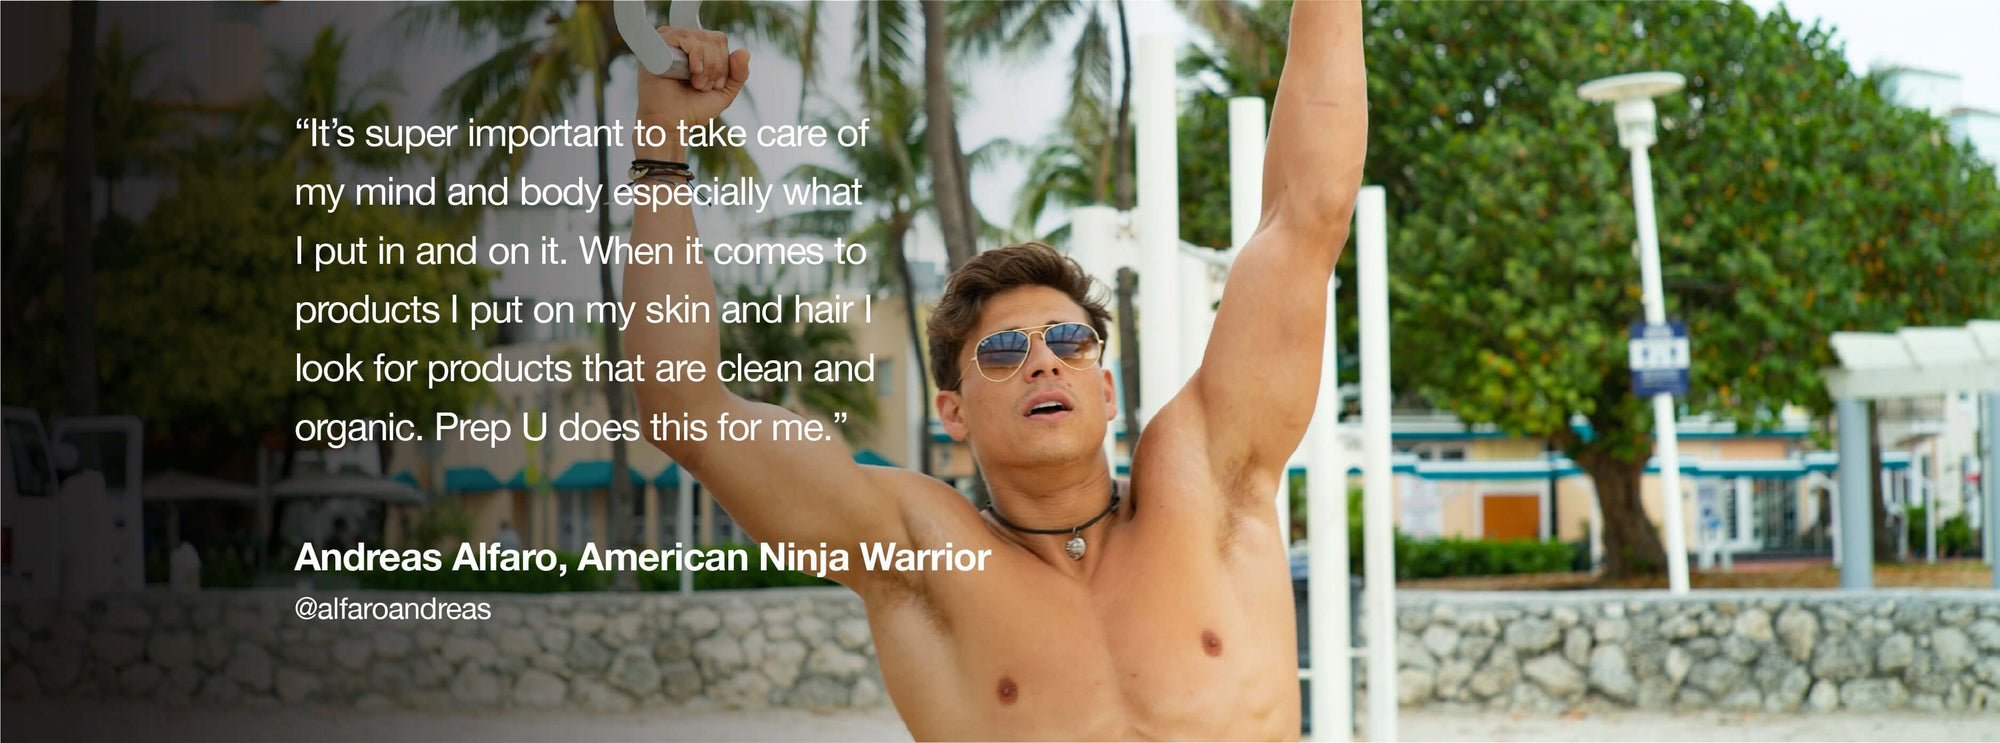 Andres American Ninja Warrior Prep U product testimonial